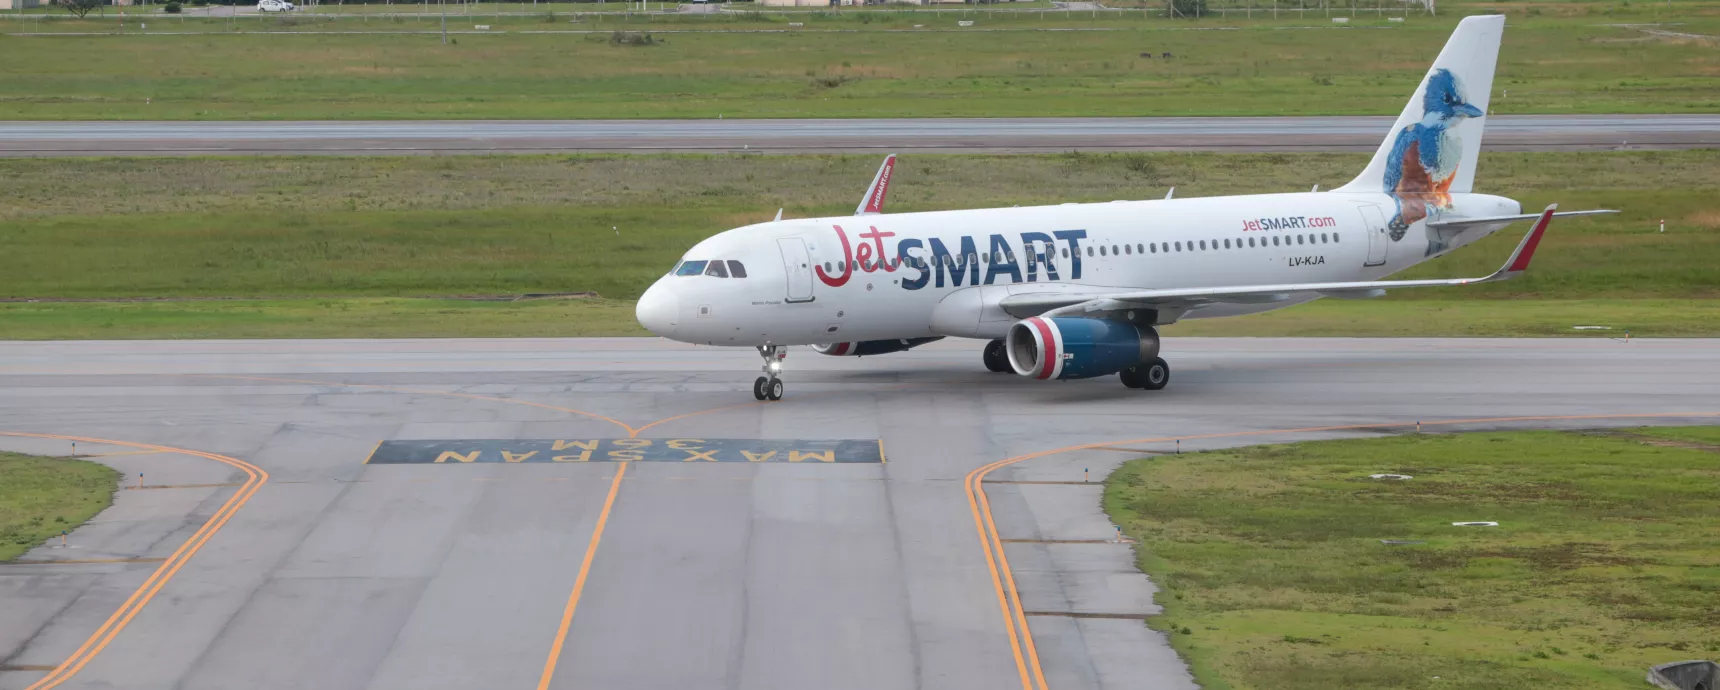 JetSMART arrived at Florianópolis International Airport